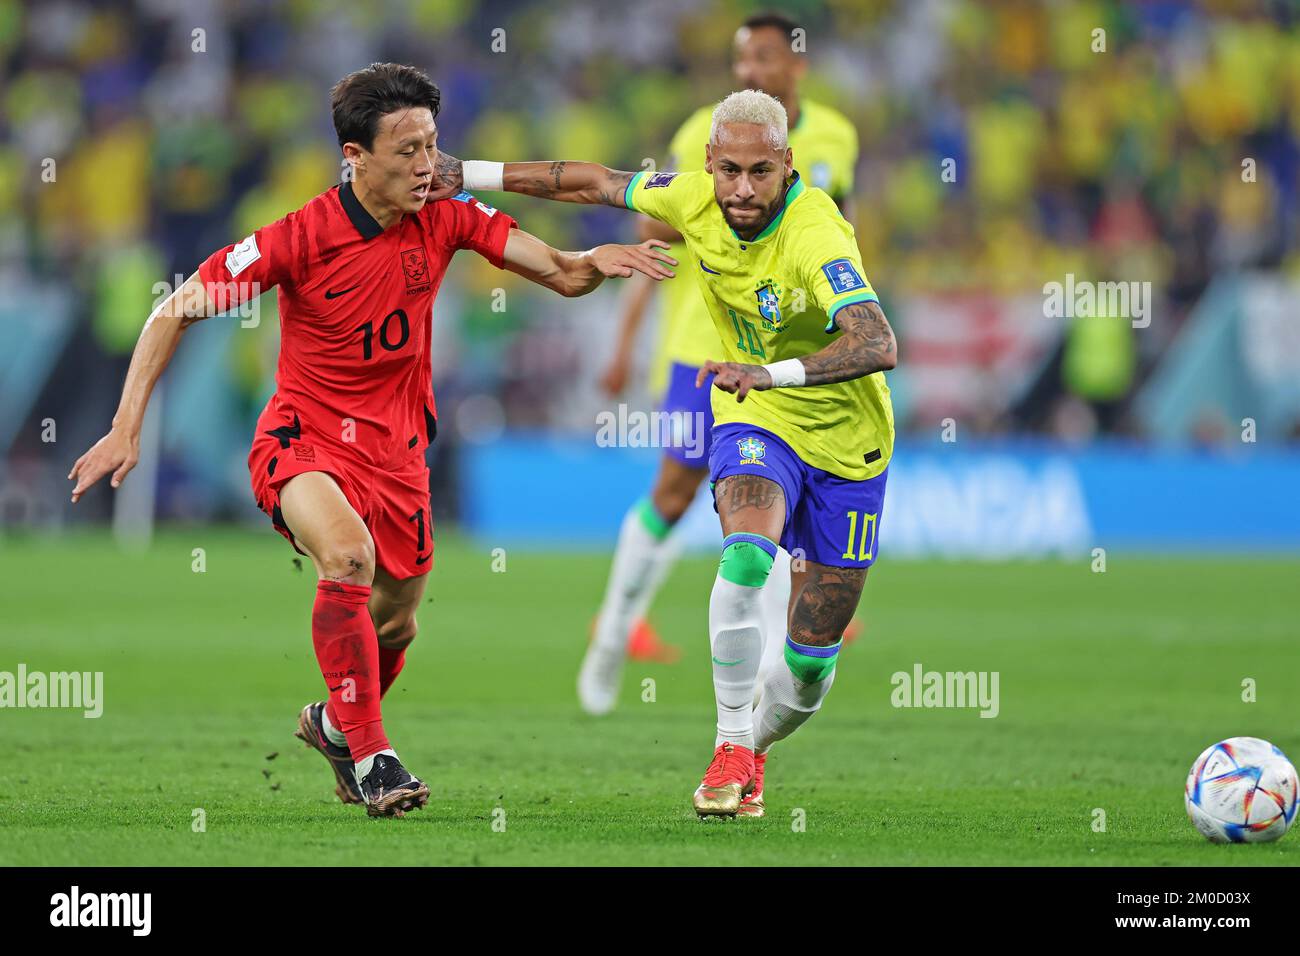 Doha, Qatar: 5th December 2022; FIFA World Cup final 16 round, Brazil versus South Korea: Neymar of Brazil challenges Lee Jae-sung of South Korea for a through ball Stock Photo